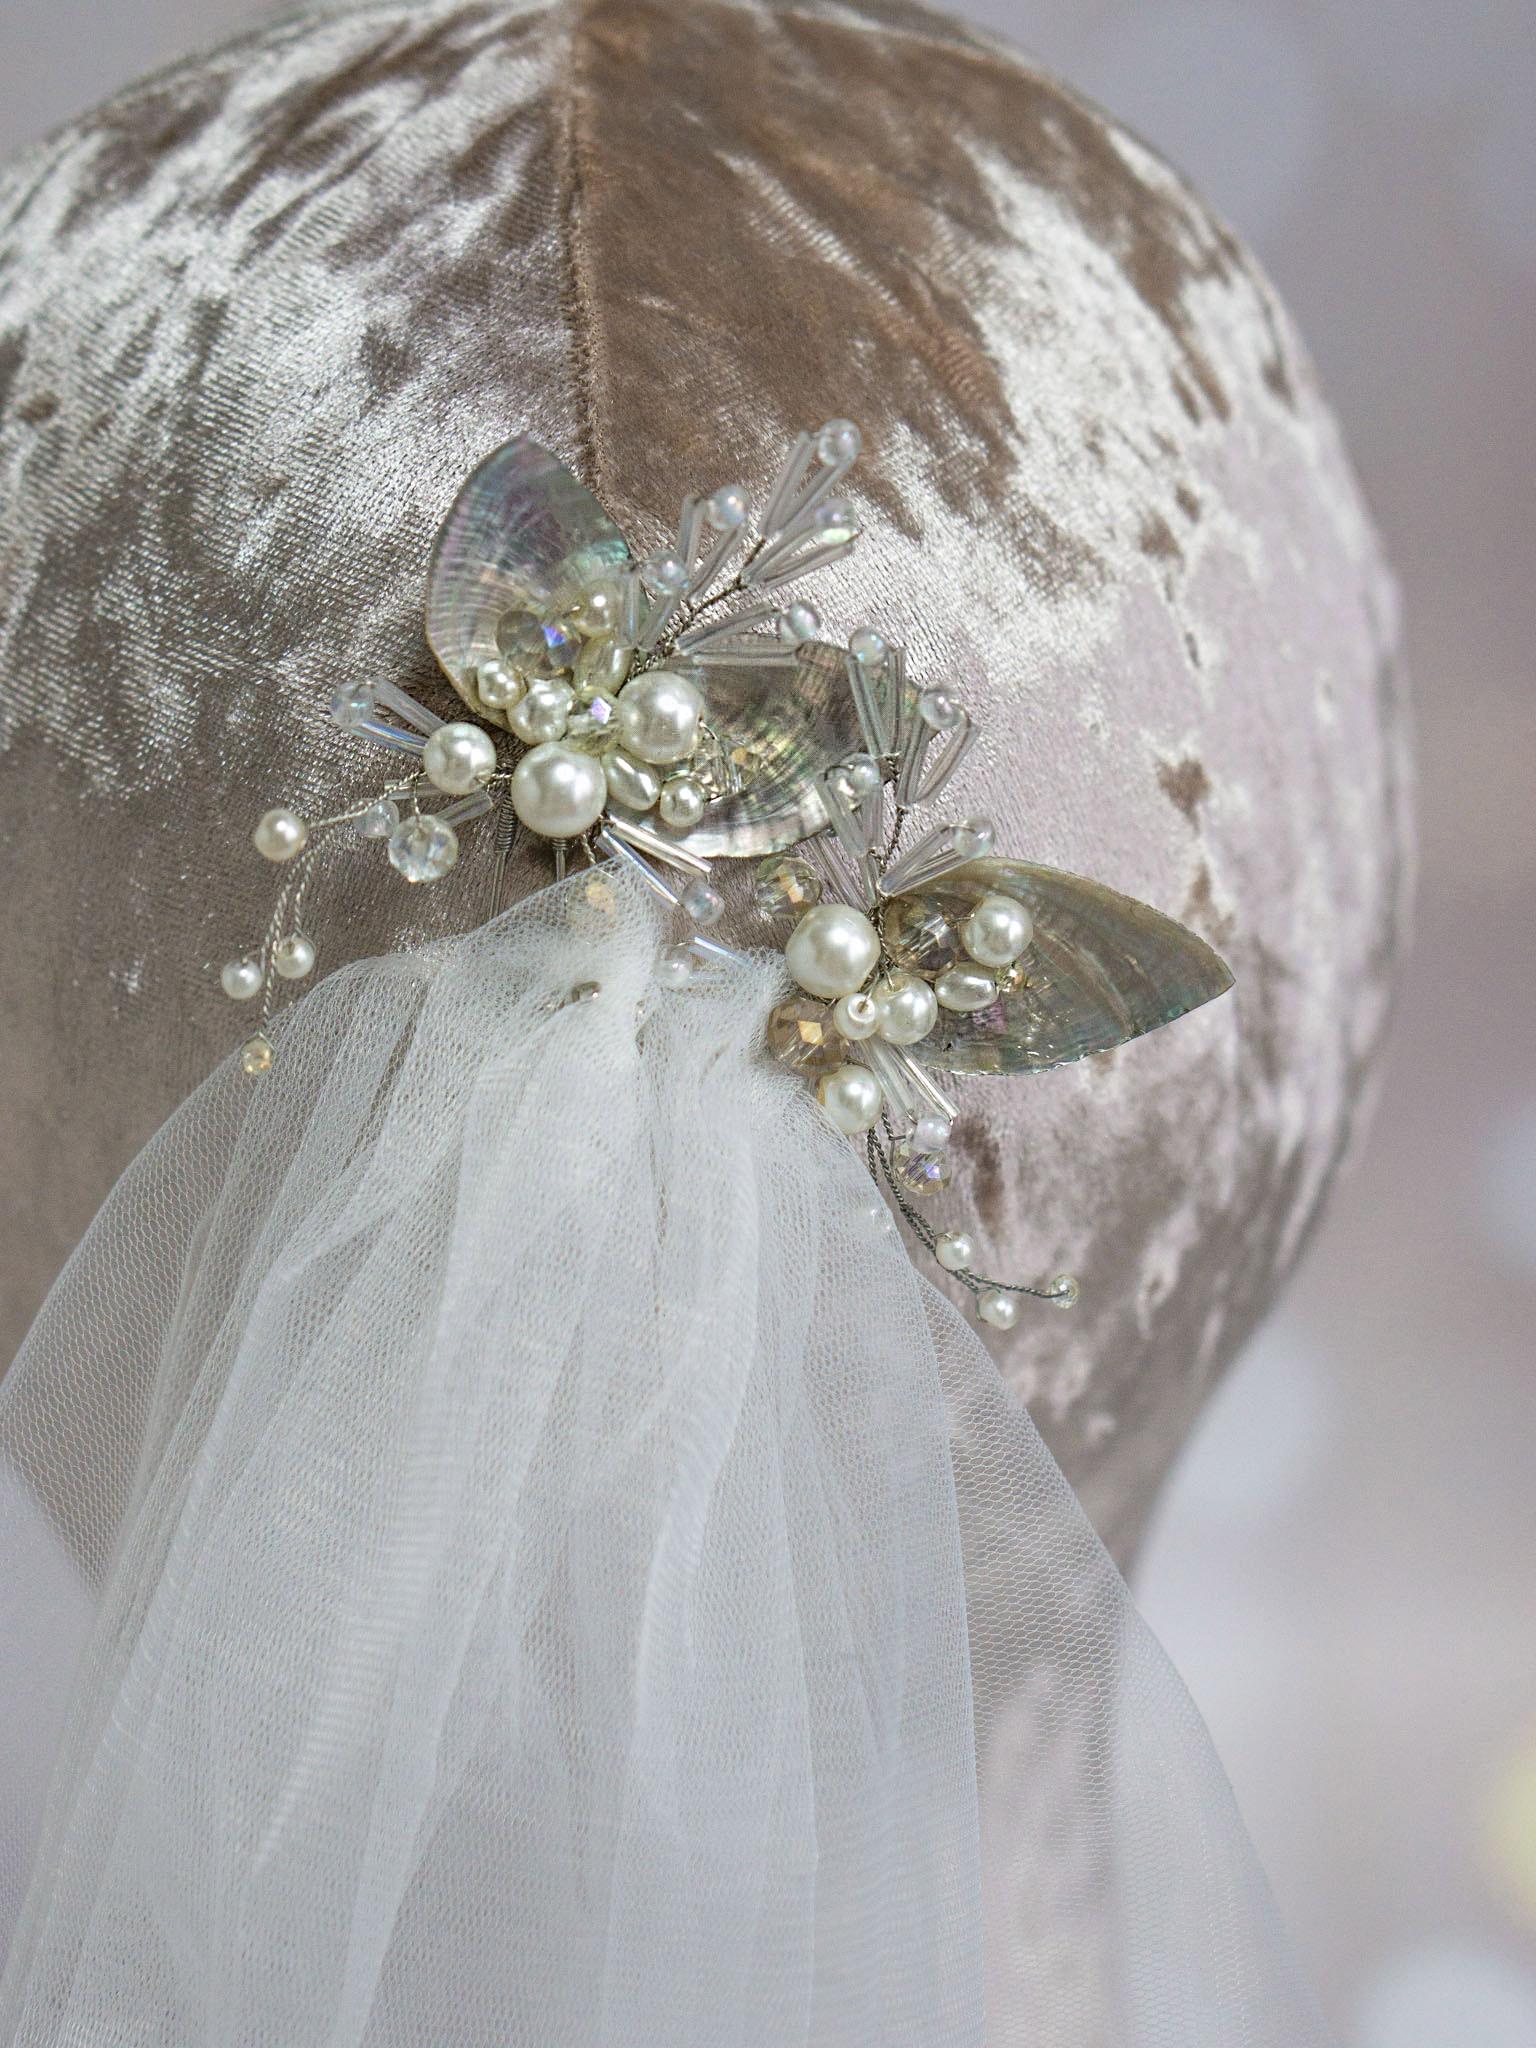 Handmade Mother-of-Pearl Bridal Hair Pins with Rainbow Hues